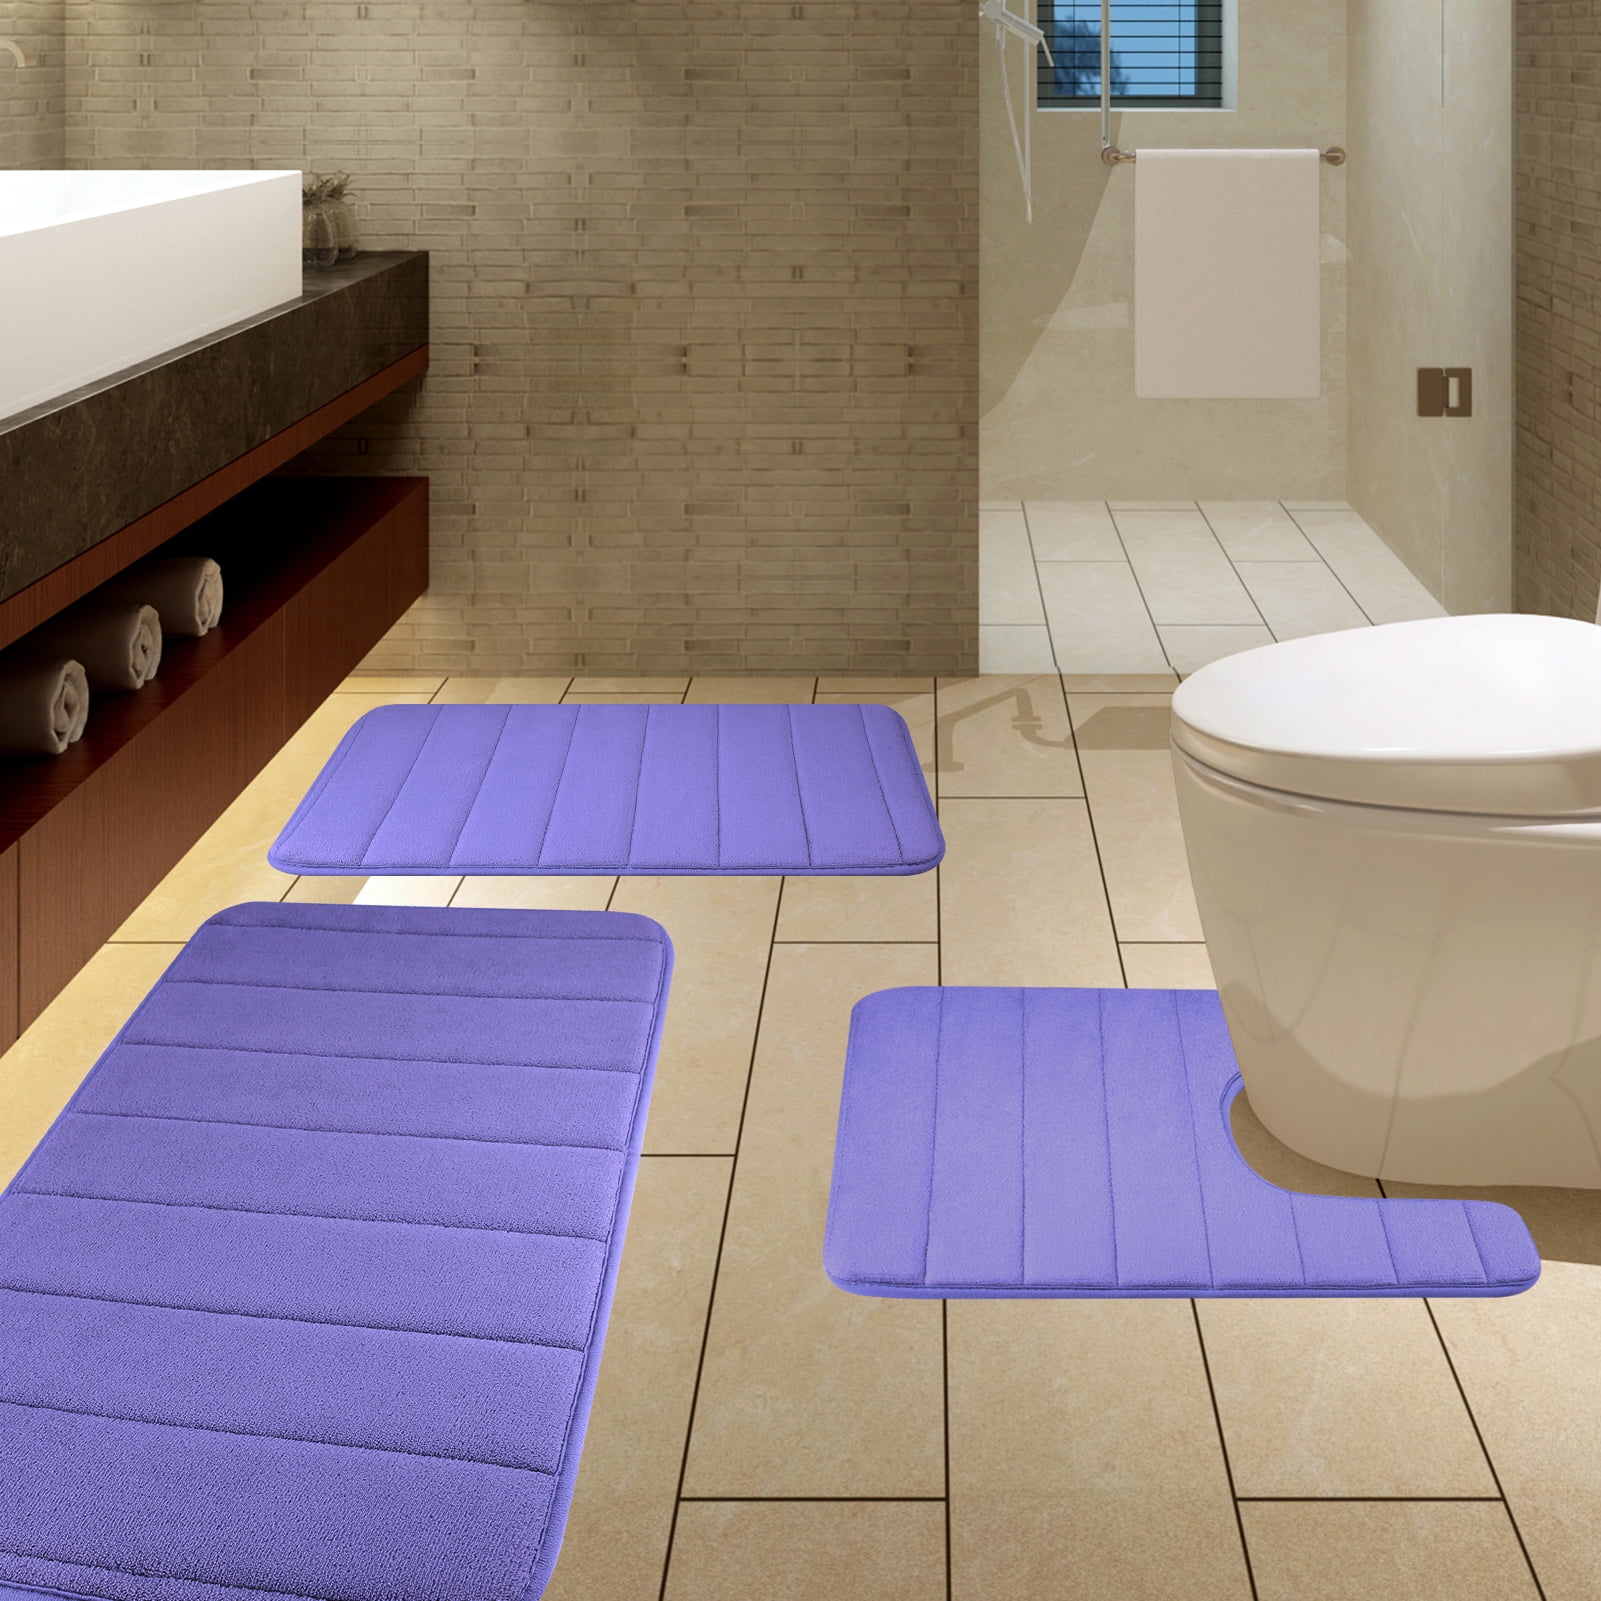 Home Bath Mat Coral Fleece Bathroom Carpet Water Absorption Non-slip Memory  Foam Absorbent Washable Rug Toilet Floor Mat